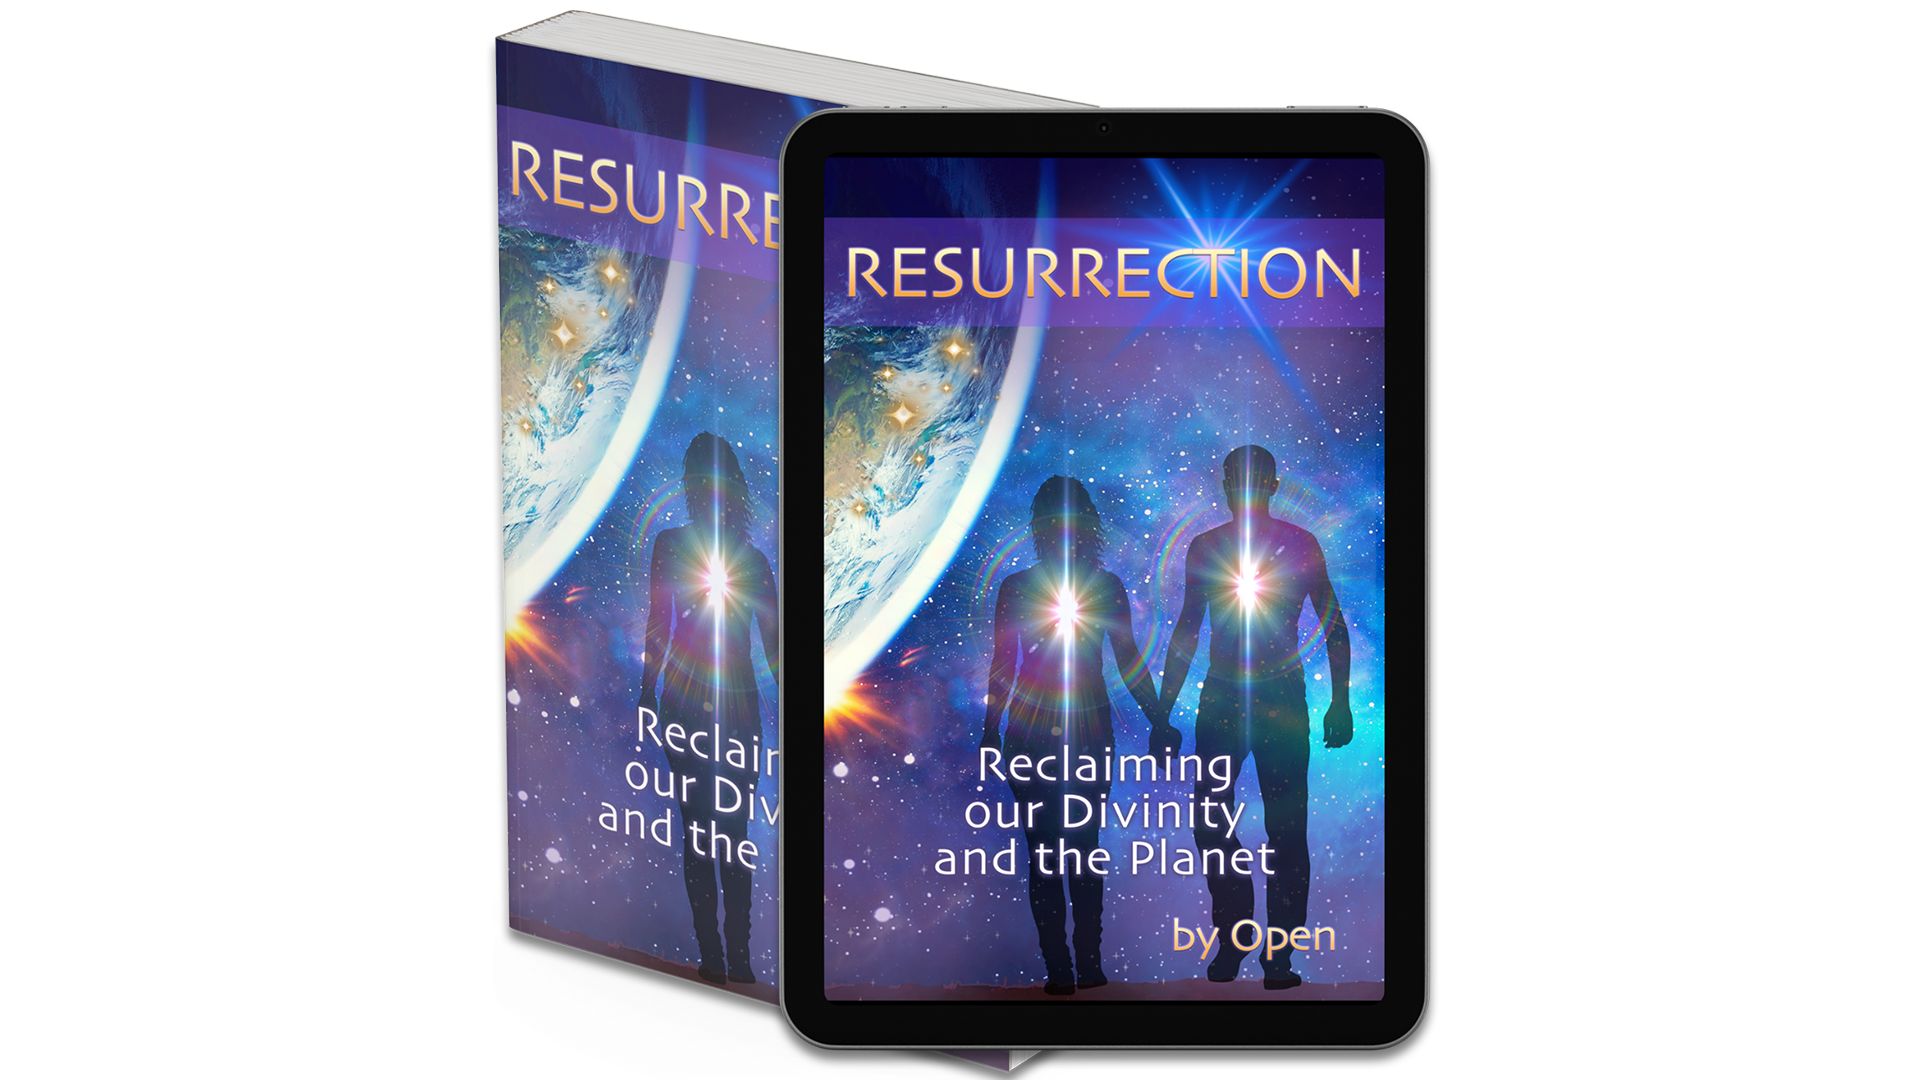 RESURRECTION: eBook image by Openhand